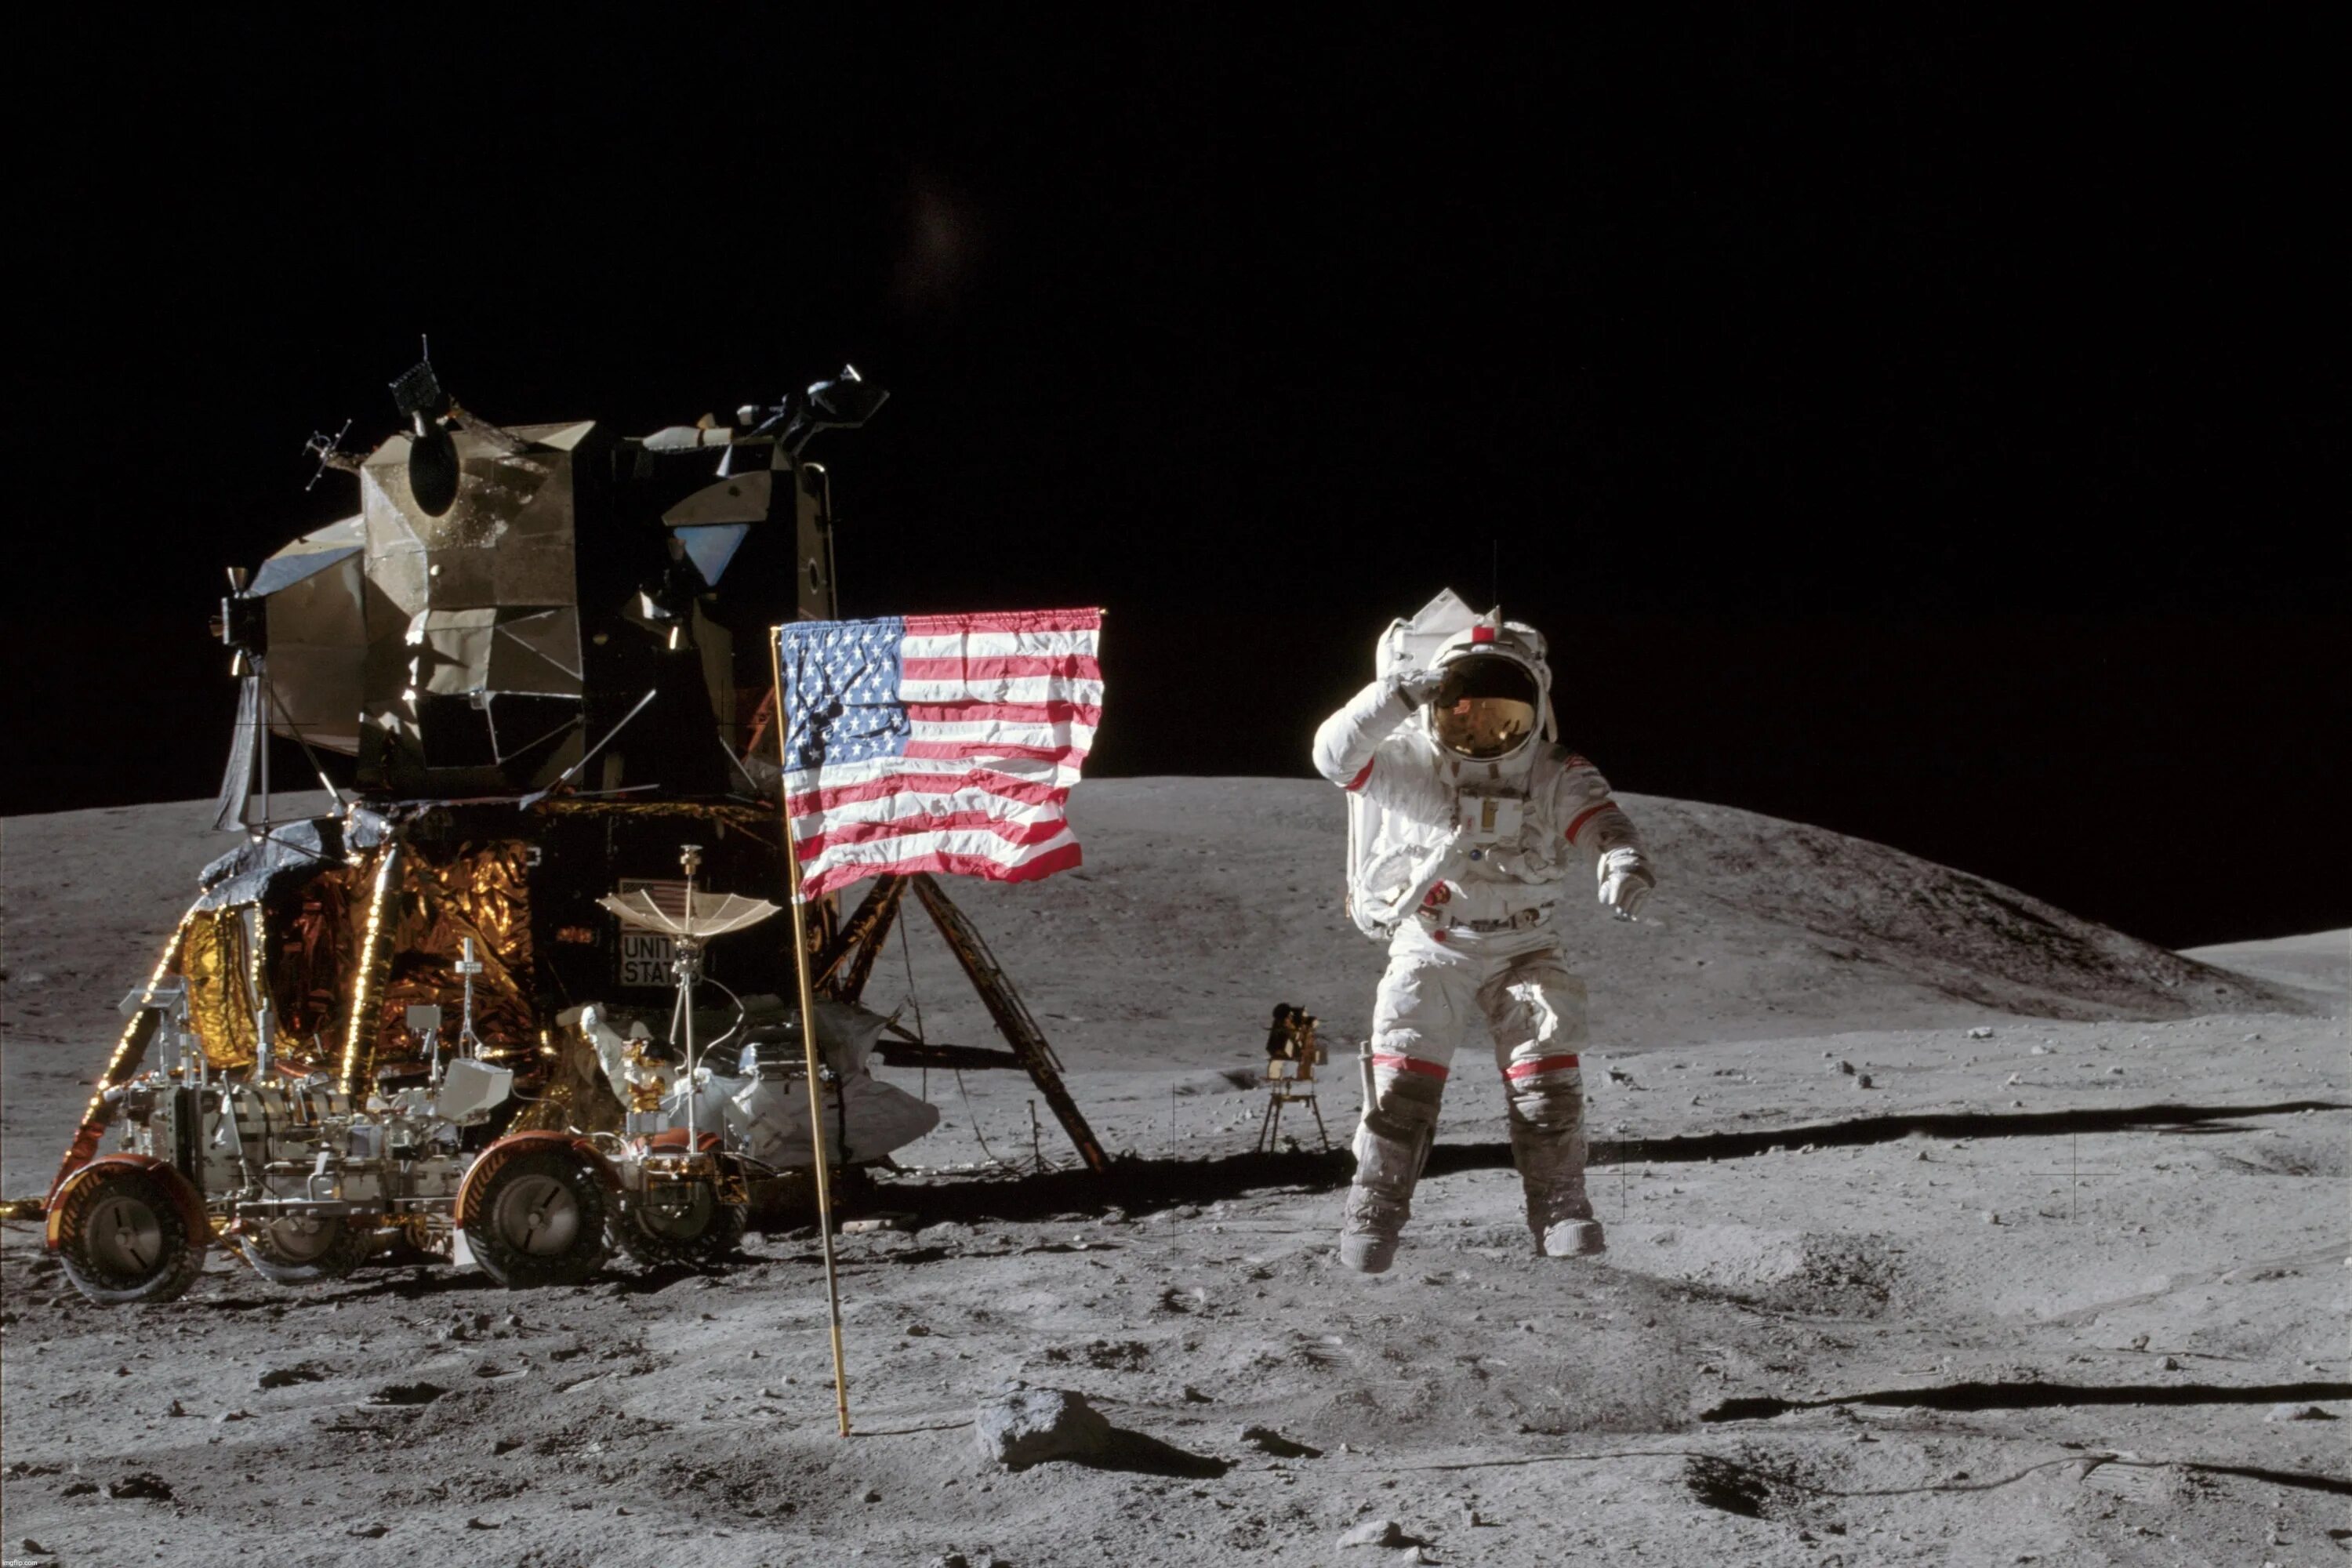 Какой аппарат совершил первую посадку на луну. 1969 Первый человек на Луне. Человек на Луне Аполлон 11. Армстронг первый человек на Луне.